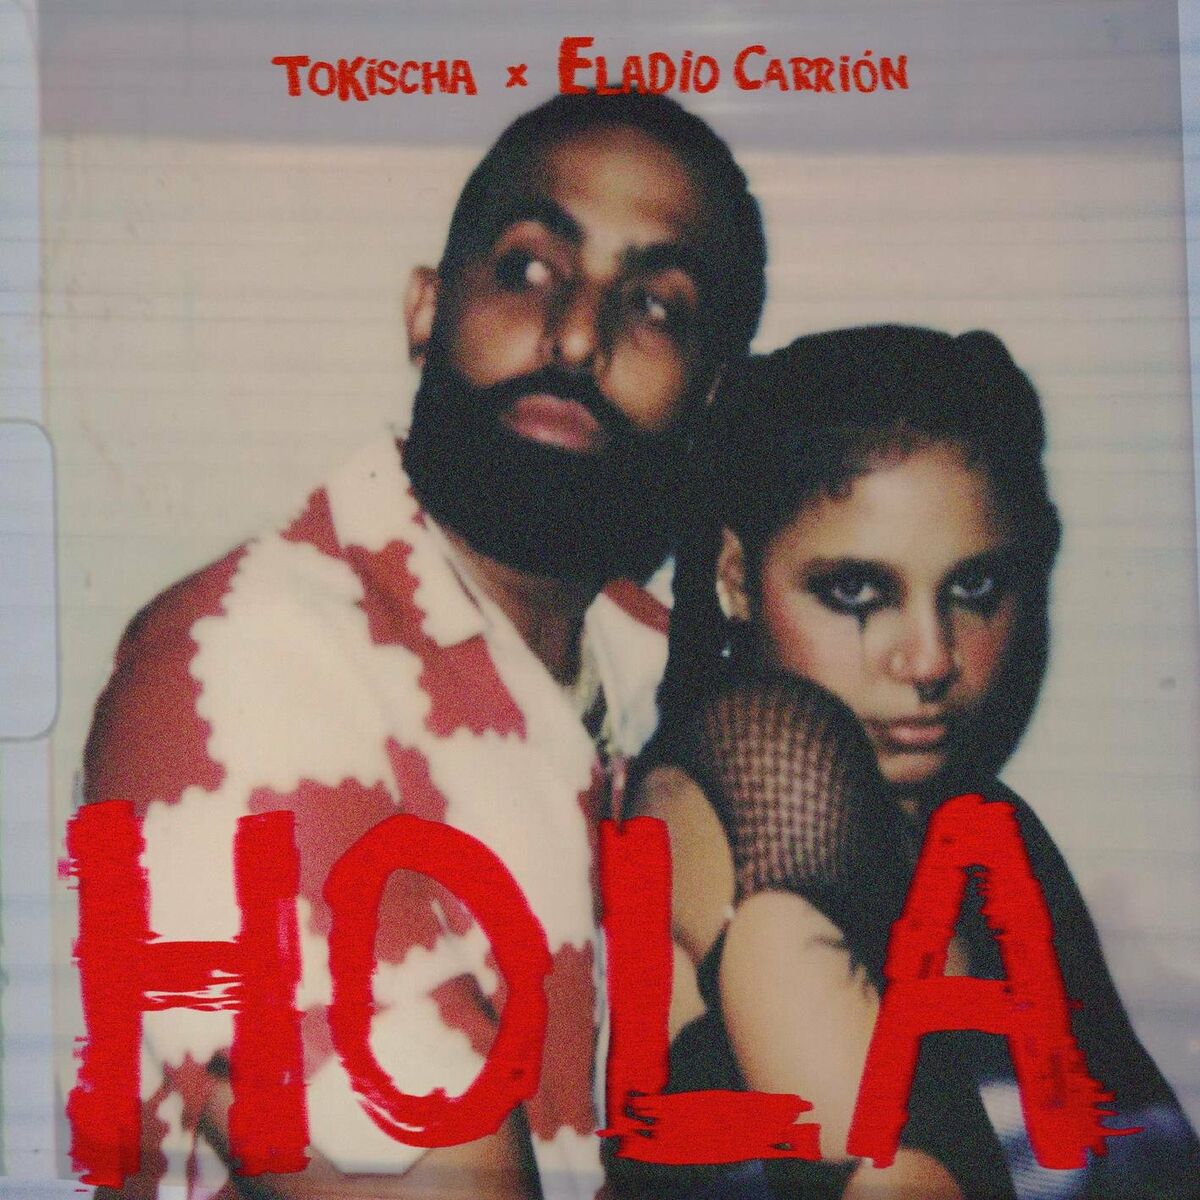 Tokischa y Eladio Carrion - Hola.mp3